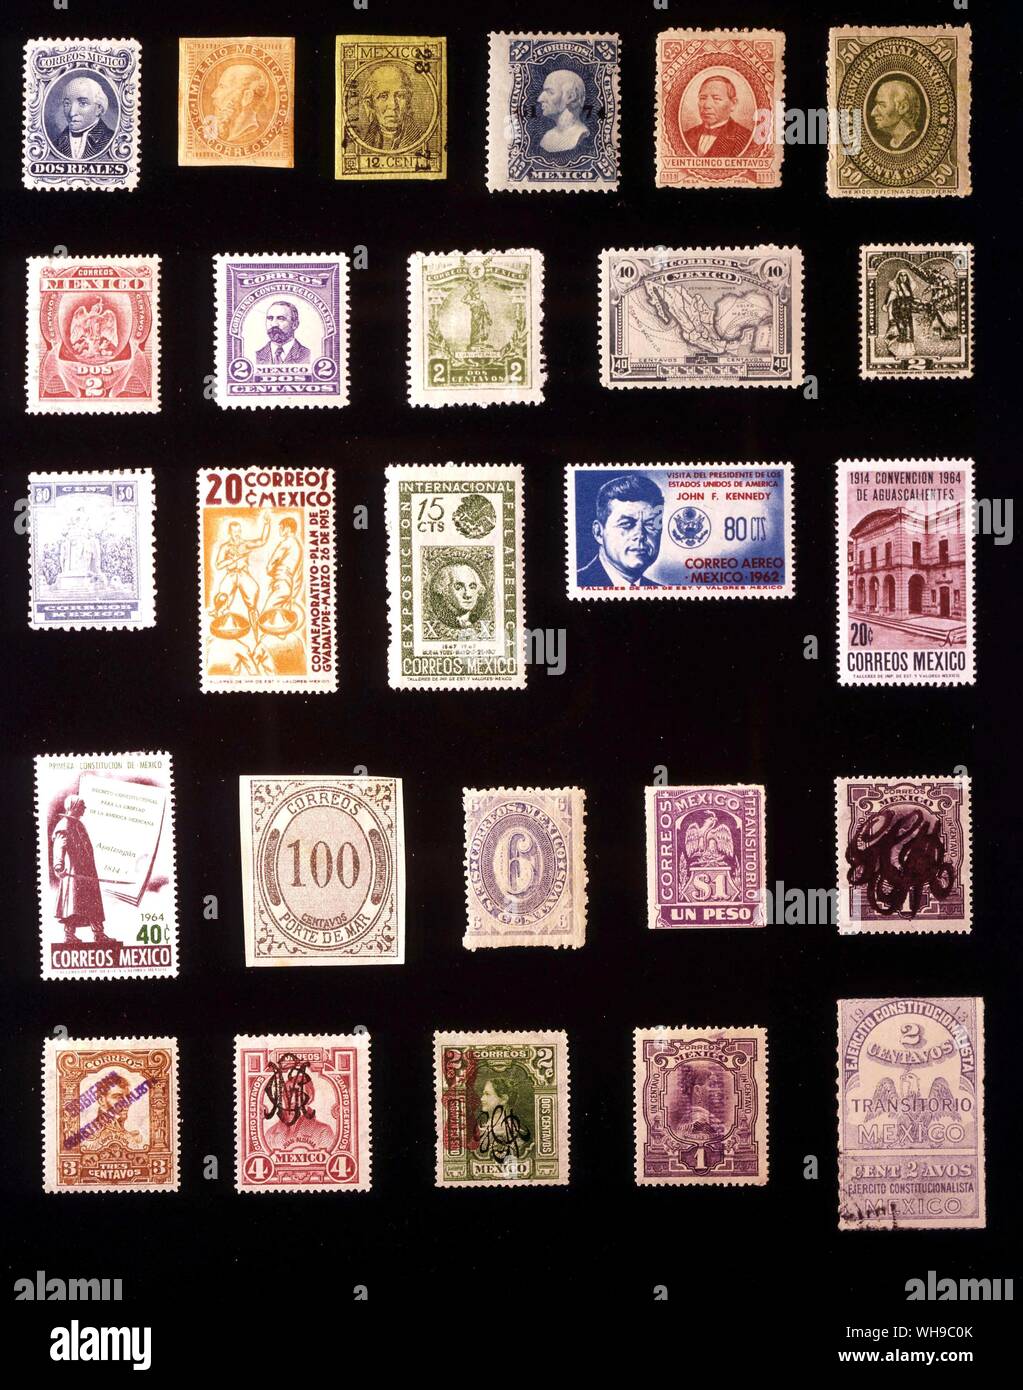 AMERICA - MEXICO: (left to right) 1. 2 reales, 1864, 2. 25 centavos, 1866, 3. 12 centavos, 1968, 4. 25 centavos, 1874, 5. 25 centavos, 1879, 6. 50 centavos, 1884, 7. 2 centavos, 1899, 8. 2 centavos, 1914, 9. 2 centavos, 1915, 10. 40 centavos, 1915, 11. 2 centavos, 1937, 12. 30 centavos, 1944, 13. 20 centavos, 1938, 14. 15 centavos, 1947, 15. 80 centavos, 1962, 16. 20 centavos, 1965, 17. 40 centavos, 1965, 18. Porte de Mar, 100 centavos, 1875, 19. 6 centavos, 1882, 20. Chihuahua, 1 peso, 1914, 21. Hermosillo, 1 centavo, 1914, 22. Monterey, 3 centavo, 1914, 22. Monterey, 3 centavos, 1914, 23. Stock Photo